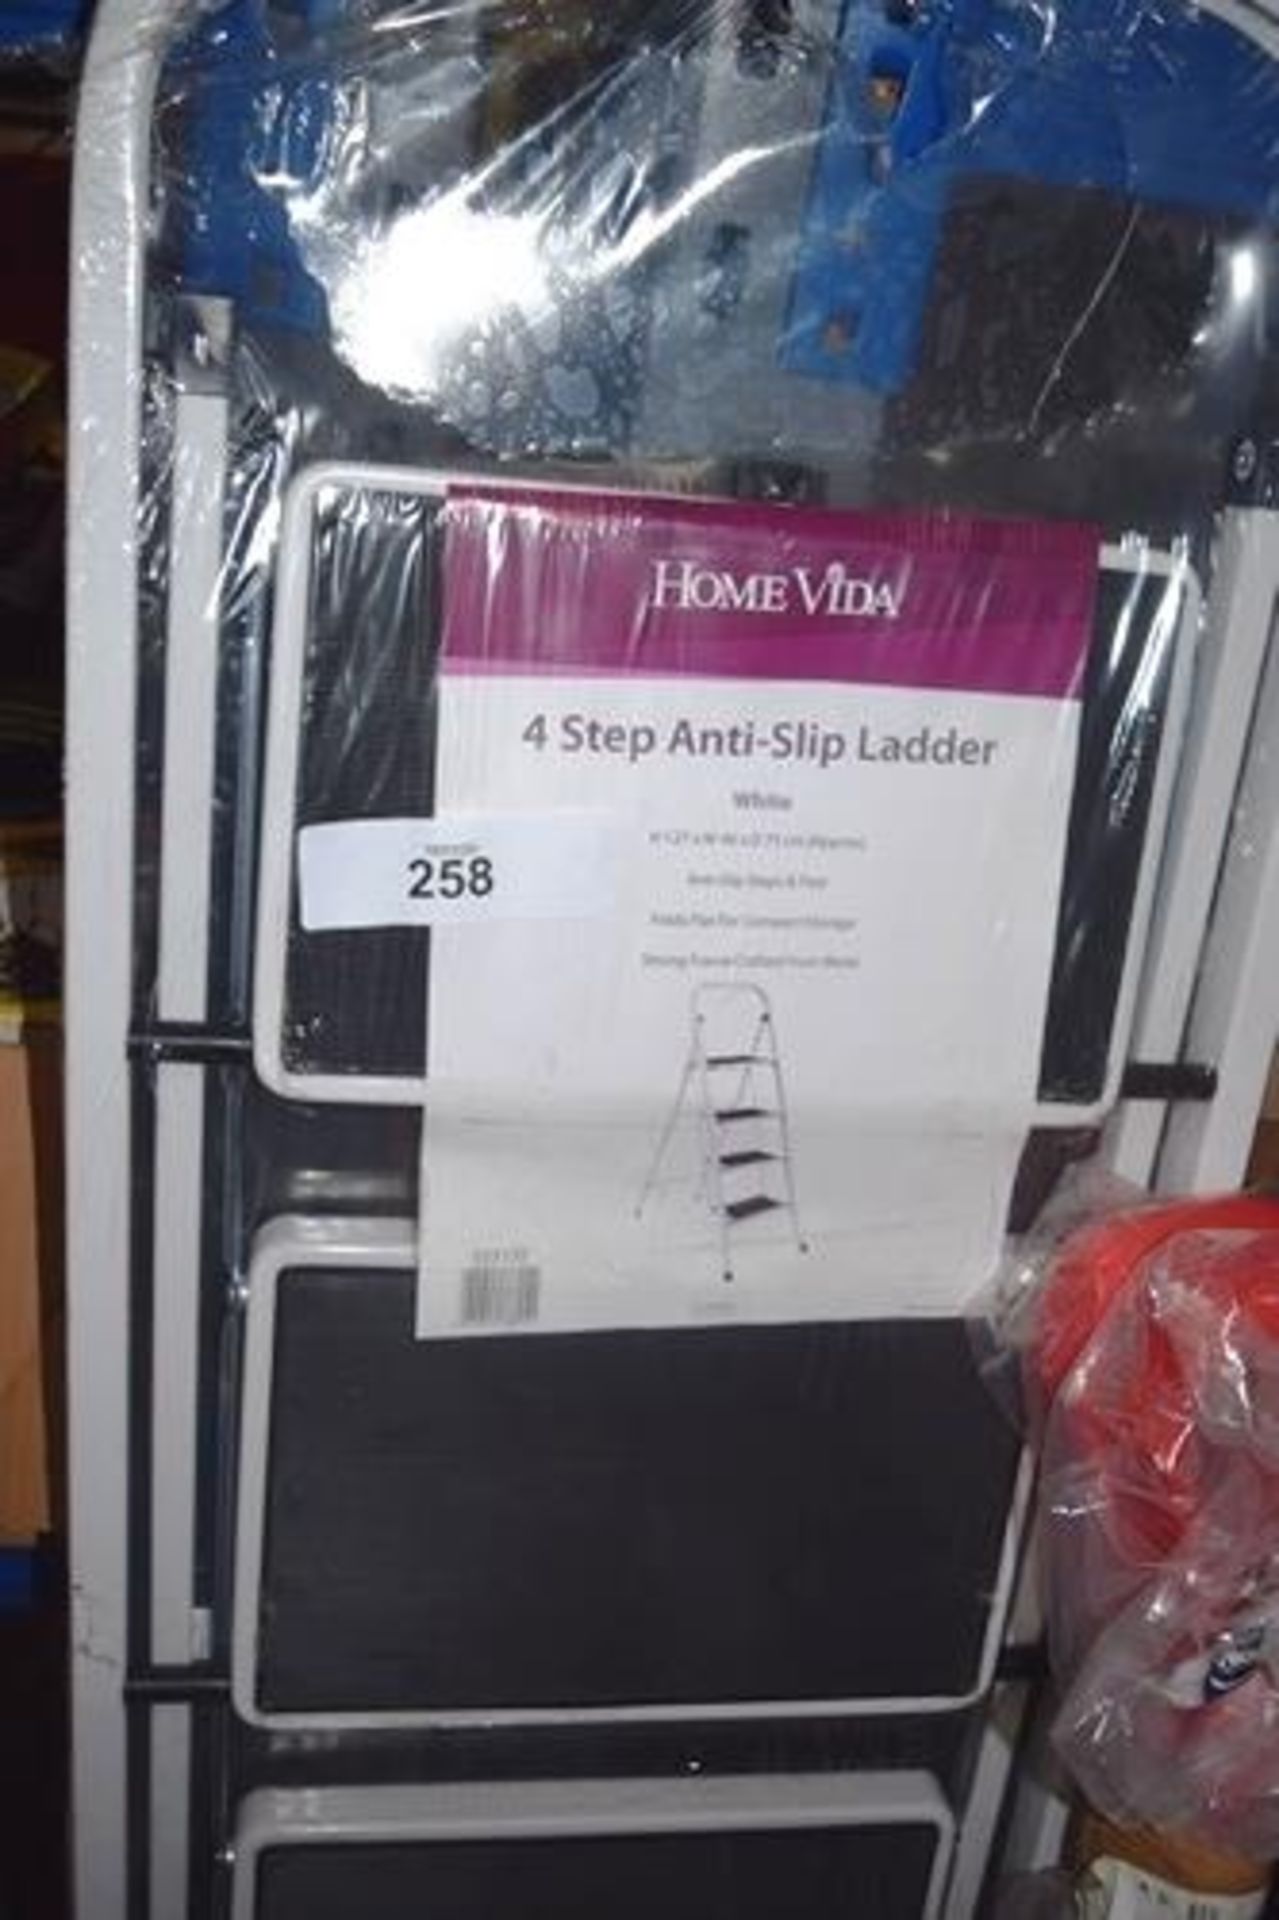 1 x set of Home Vida 4 step anti-slip white ladder, code 333137 - New in pack (gs25floor)